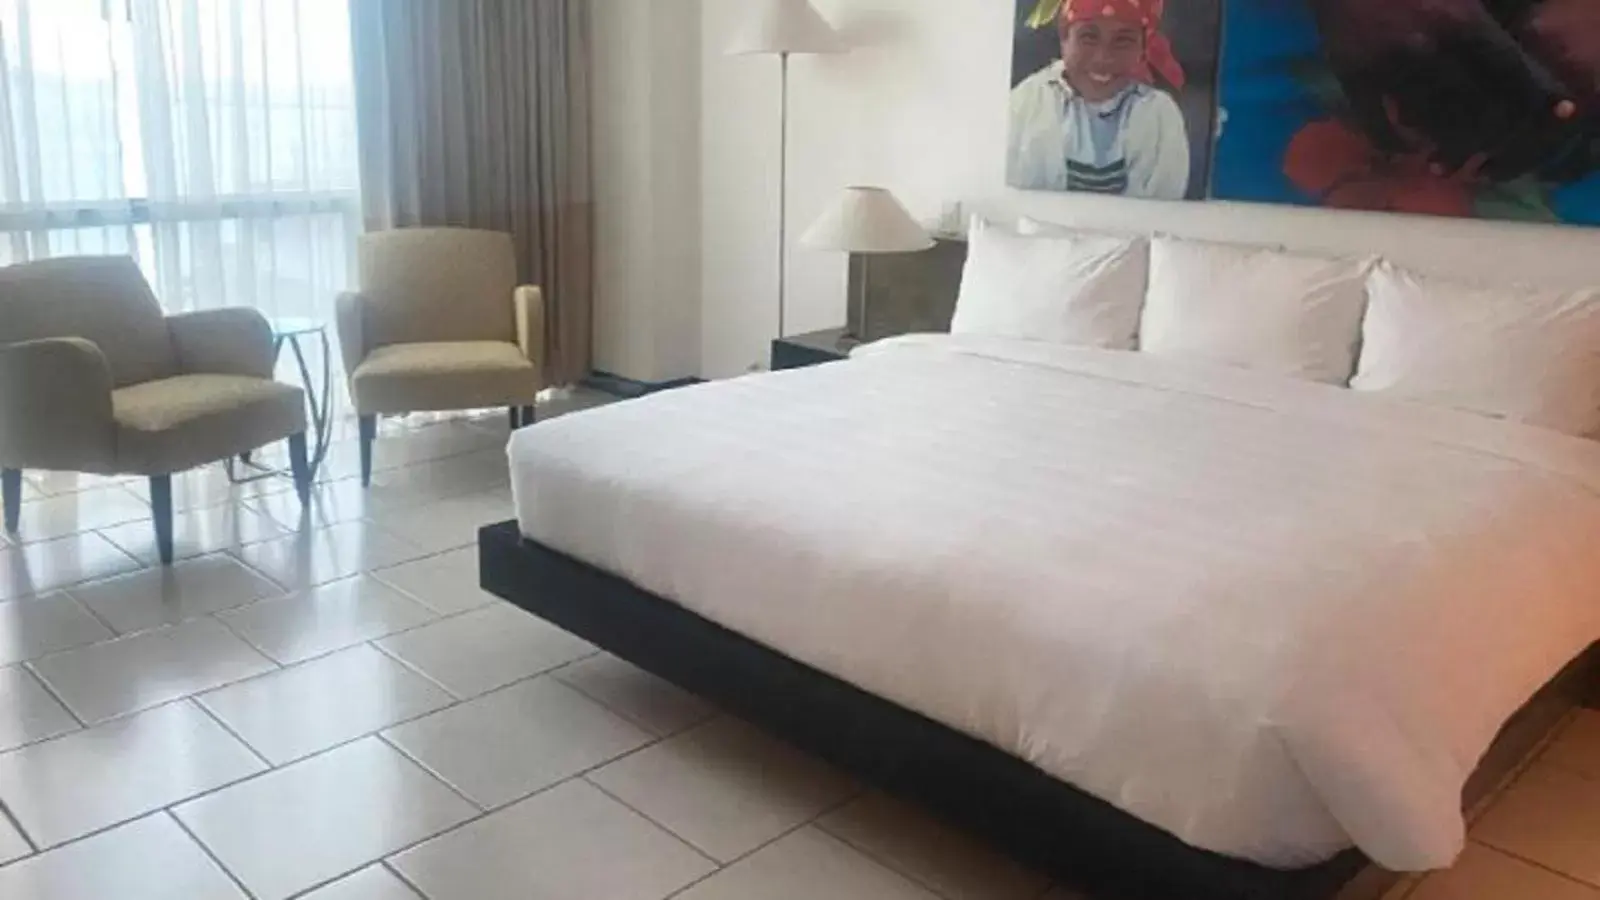 Bed in Decapolis Hotel Panama City